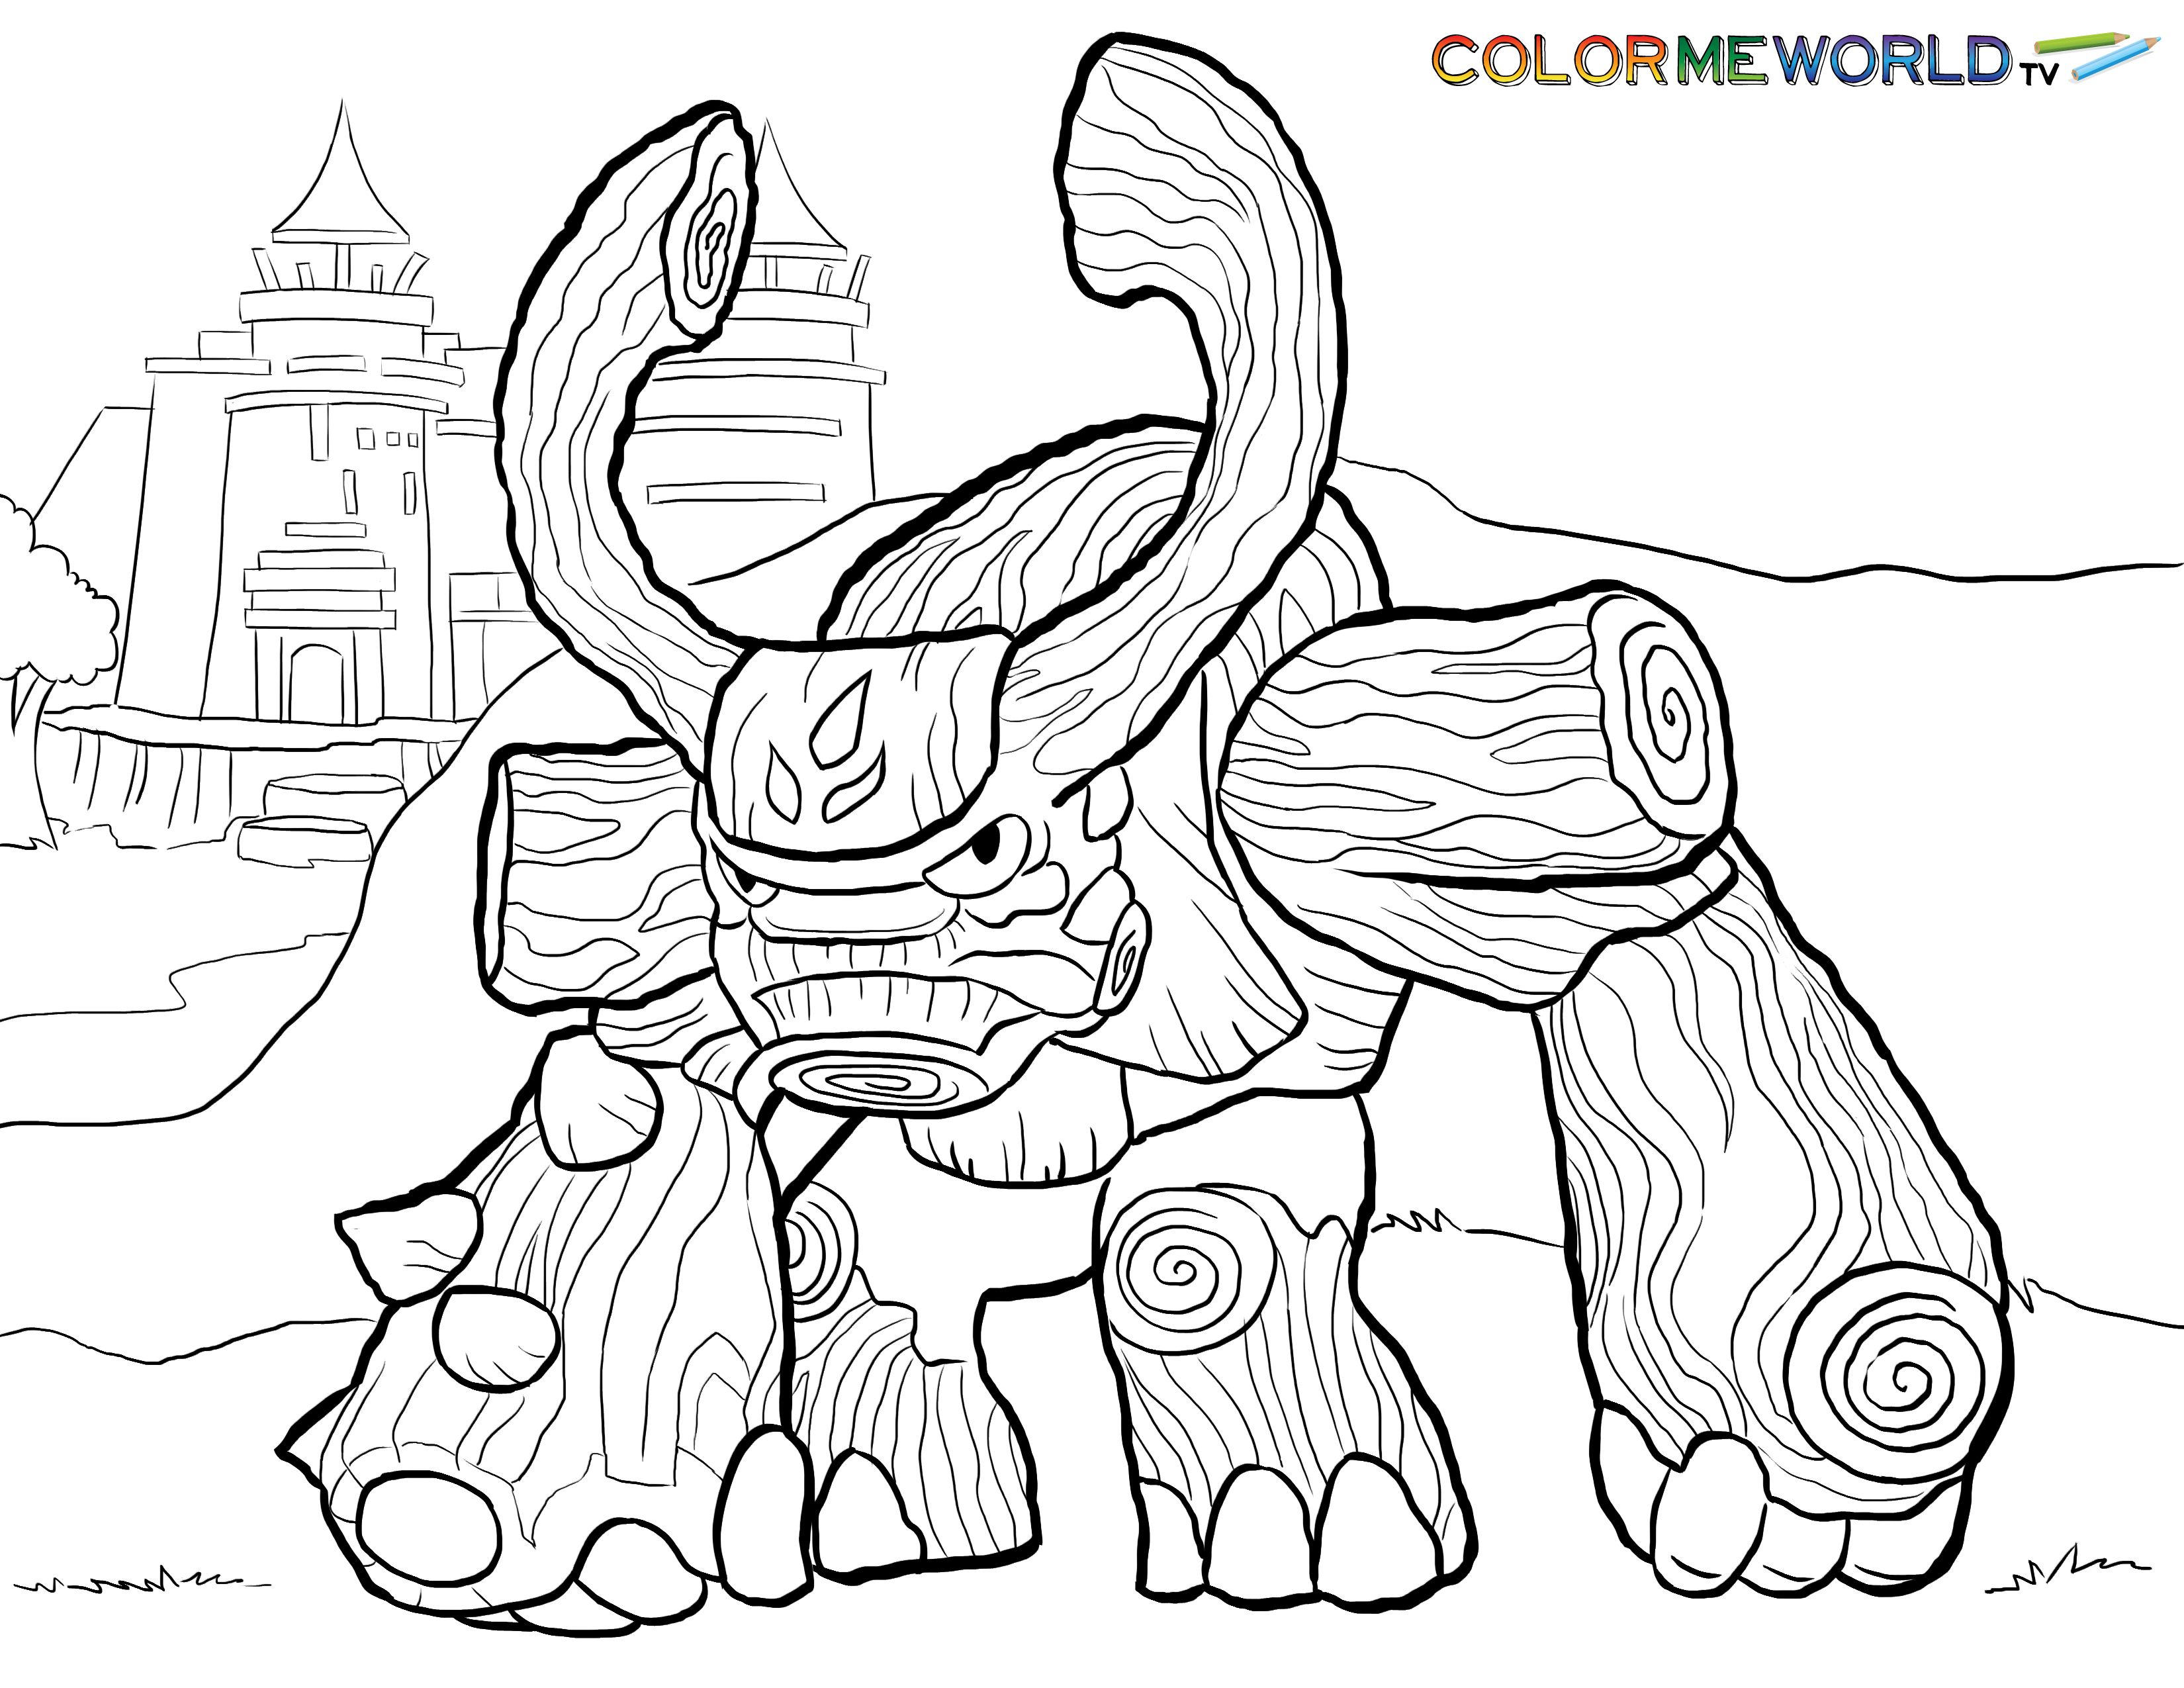 Coloring page: Skylanders (Cartoons) #43406 - Free Printable Coloring Pages